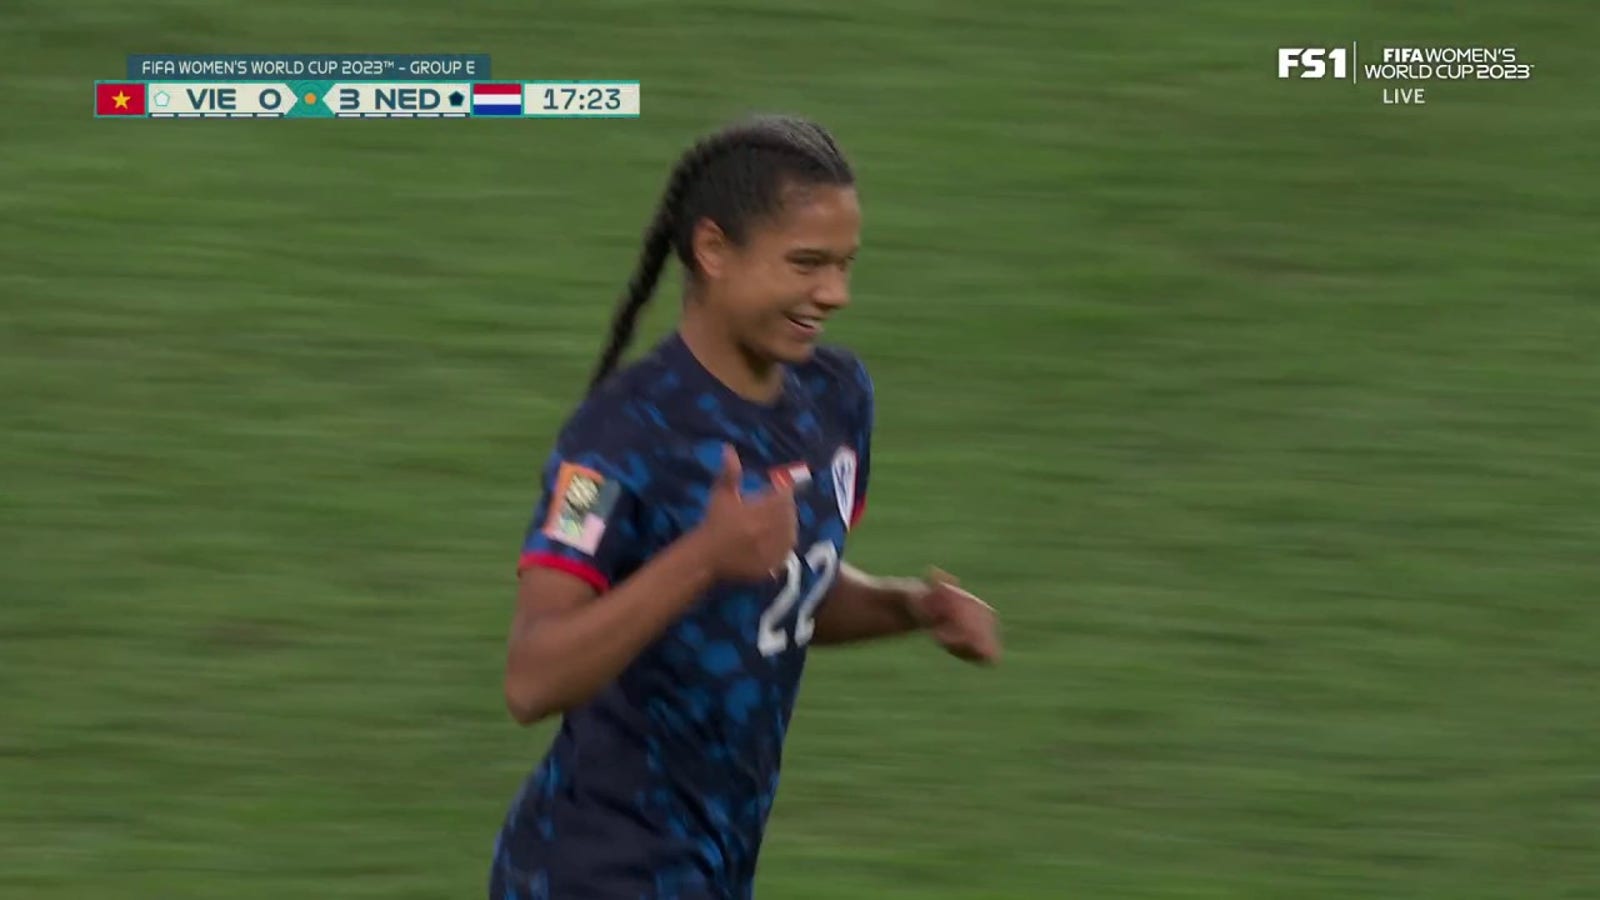 Beryl TV 30565389672 Vietnam vs. Netherlands live updates: Netherlands dominating, 7-0 Sports 